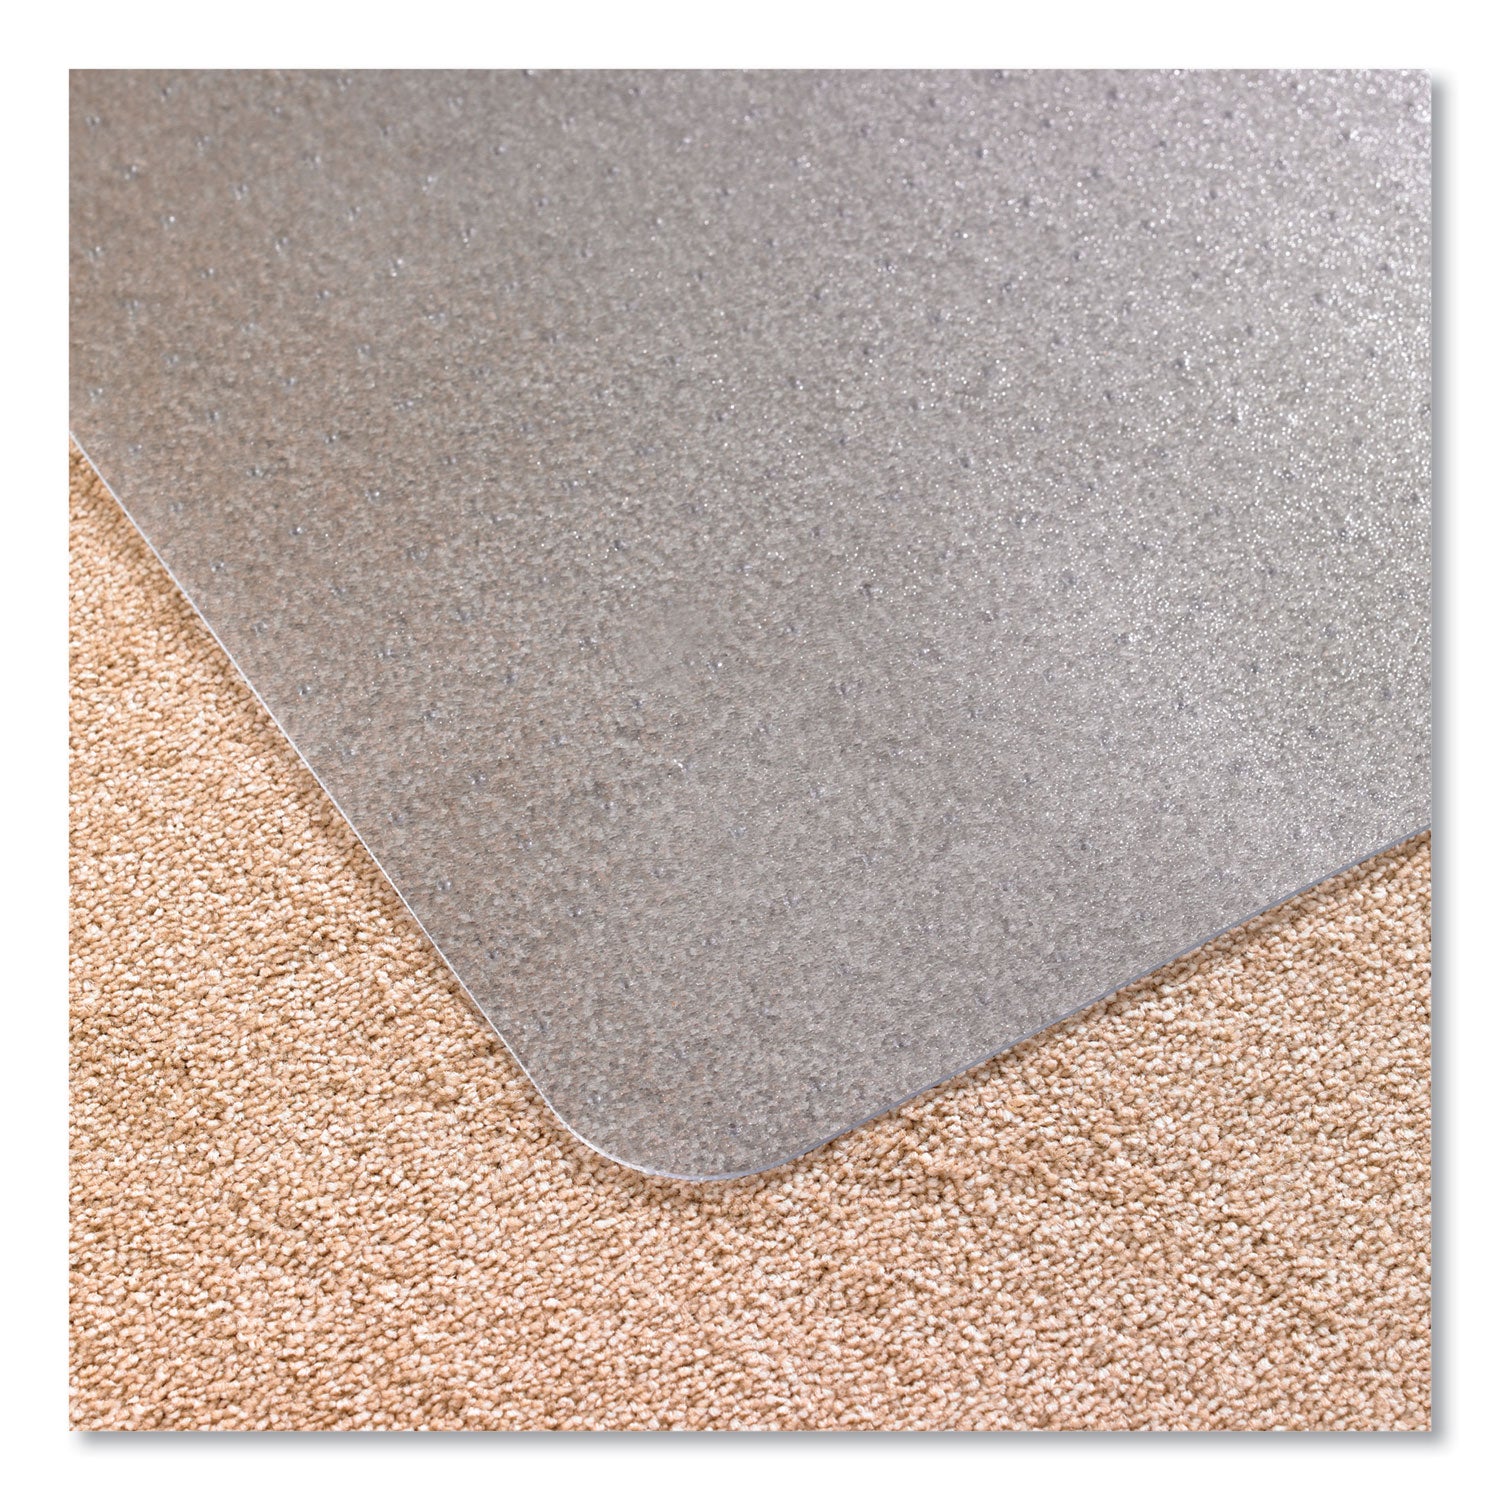 Cleartex Advantagemat Phthalate Free PVC Chair Mat for Low Pile Carpet, 48 x 36, Clear - 